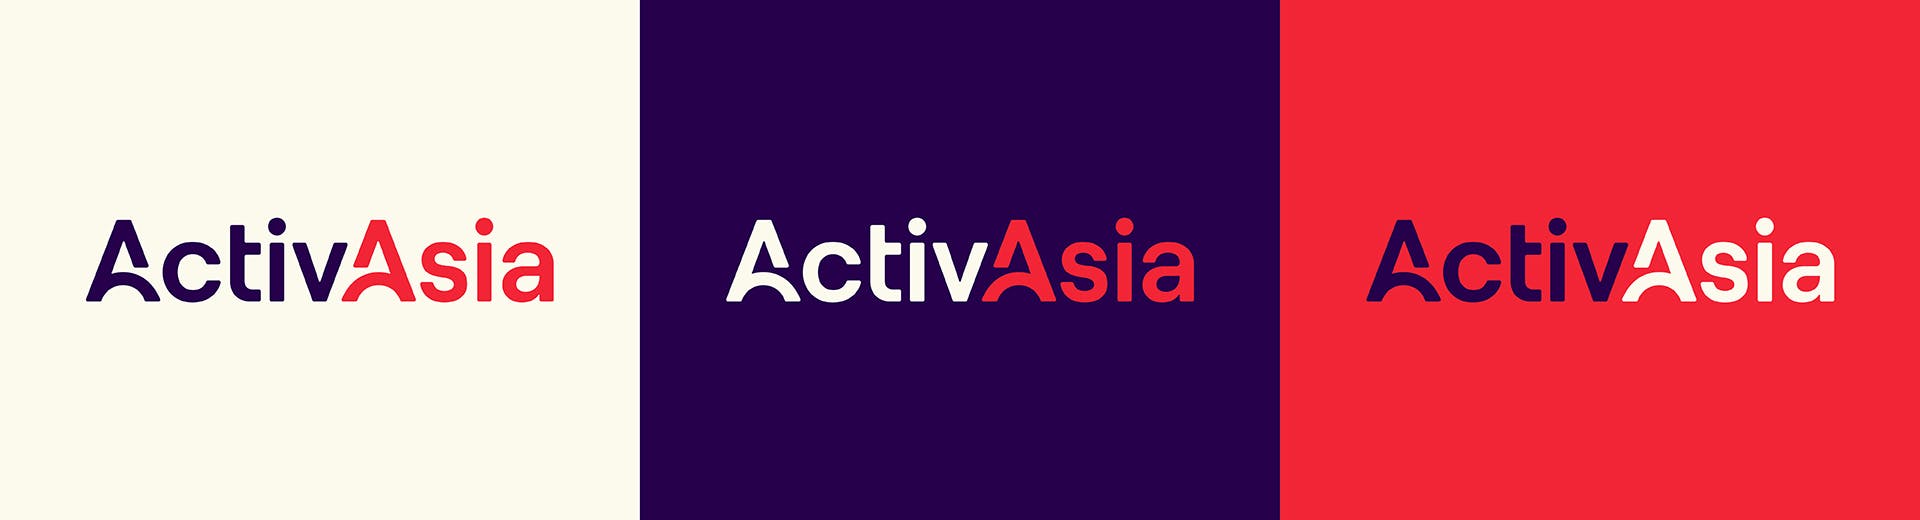 ActivAsia - Coda Builder_Primary Colors.jpg